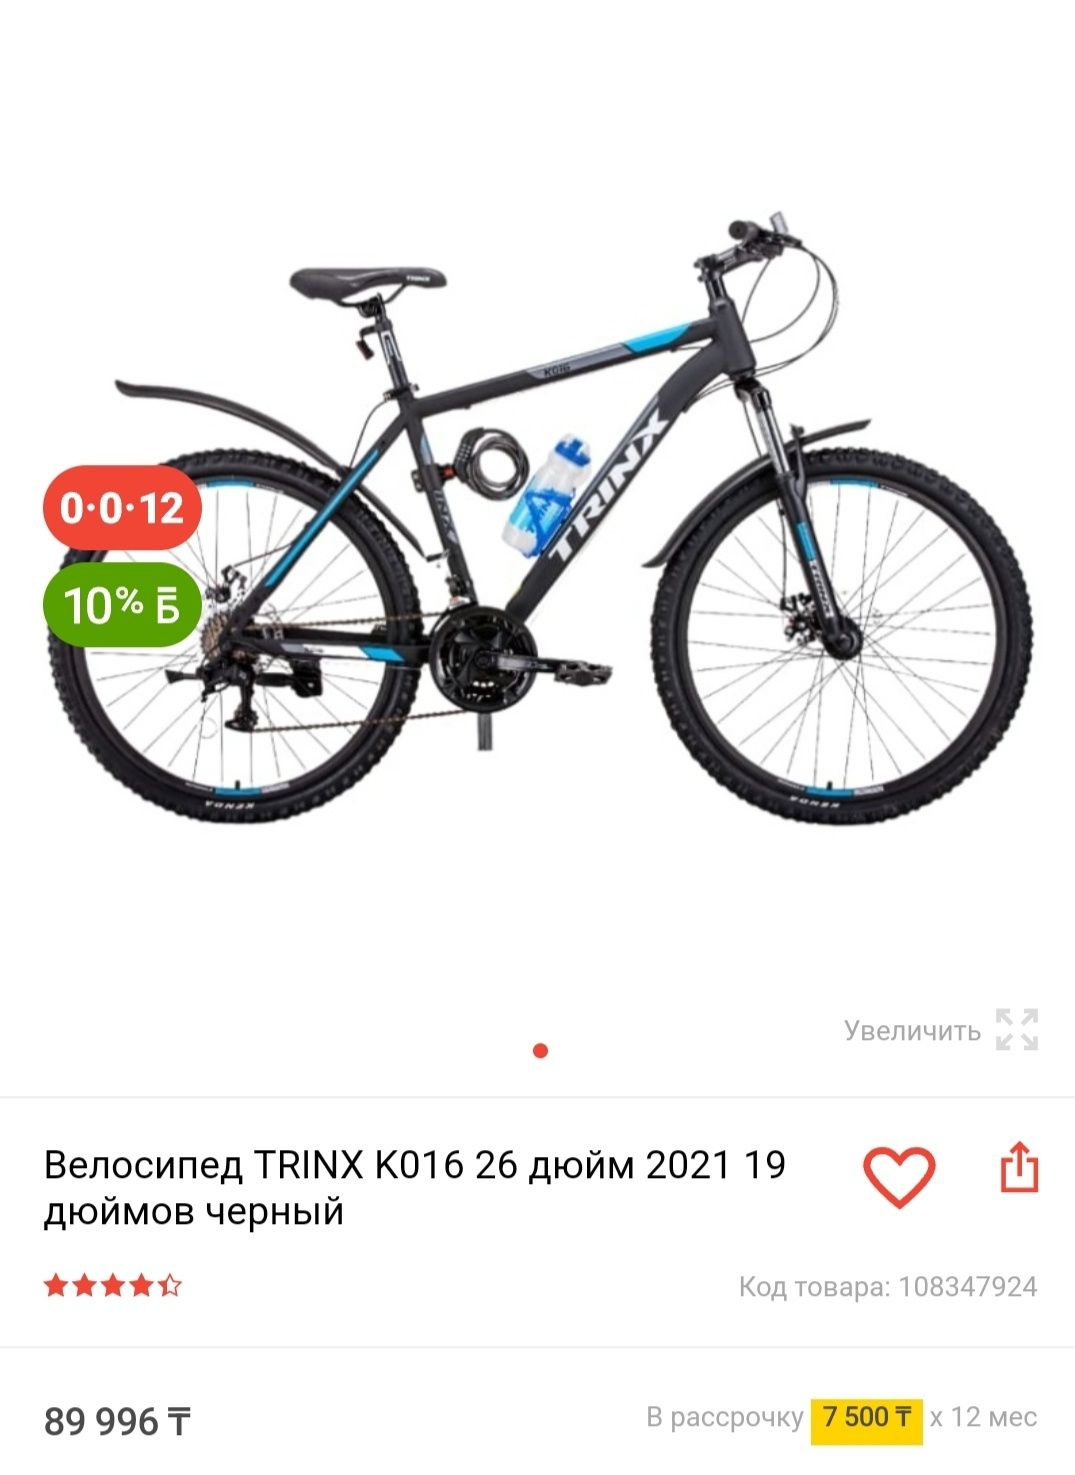 Продам велосипед TRINX К016 26 колесо, 19 рама